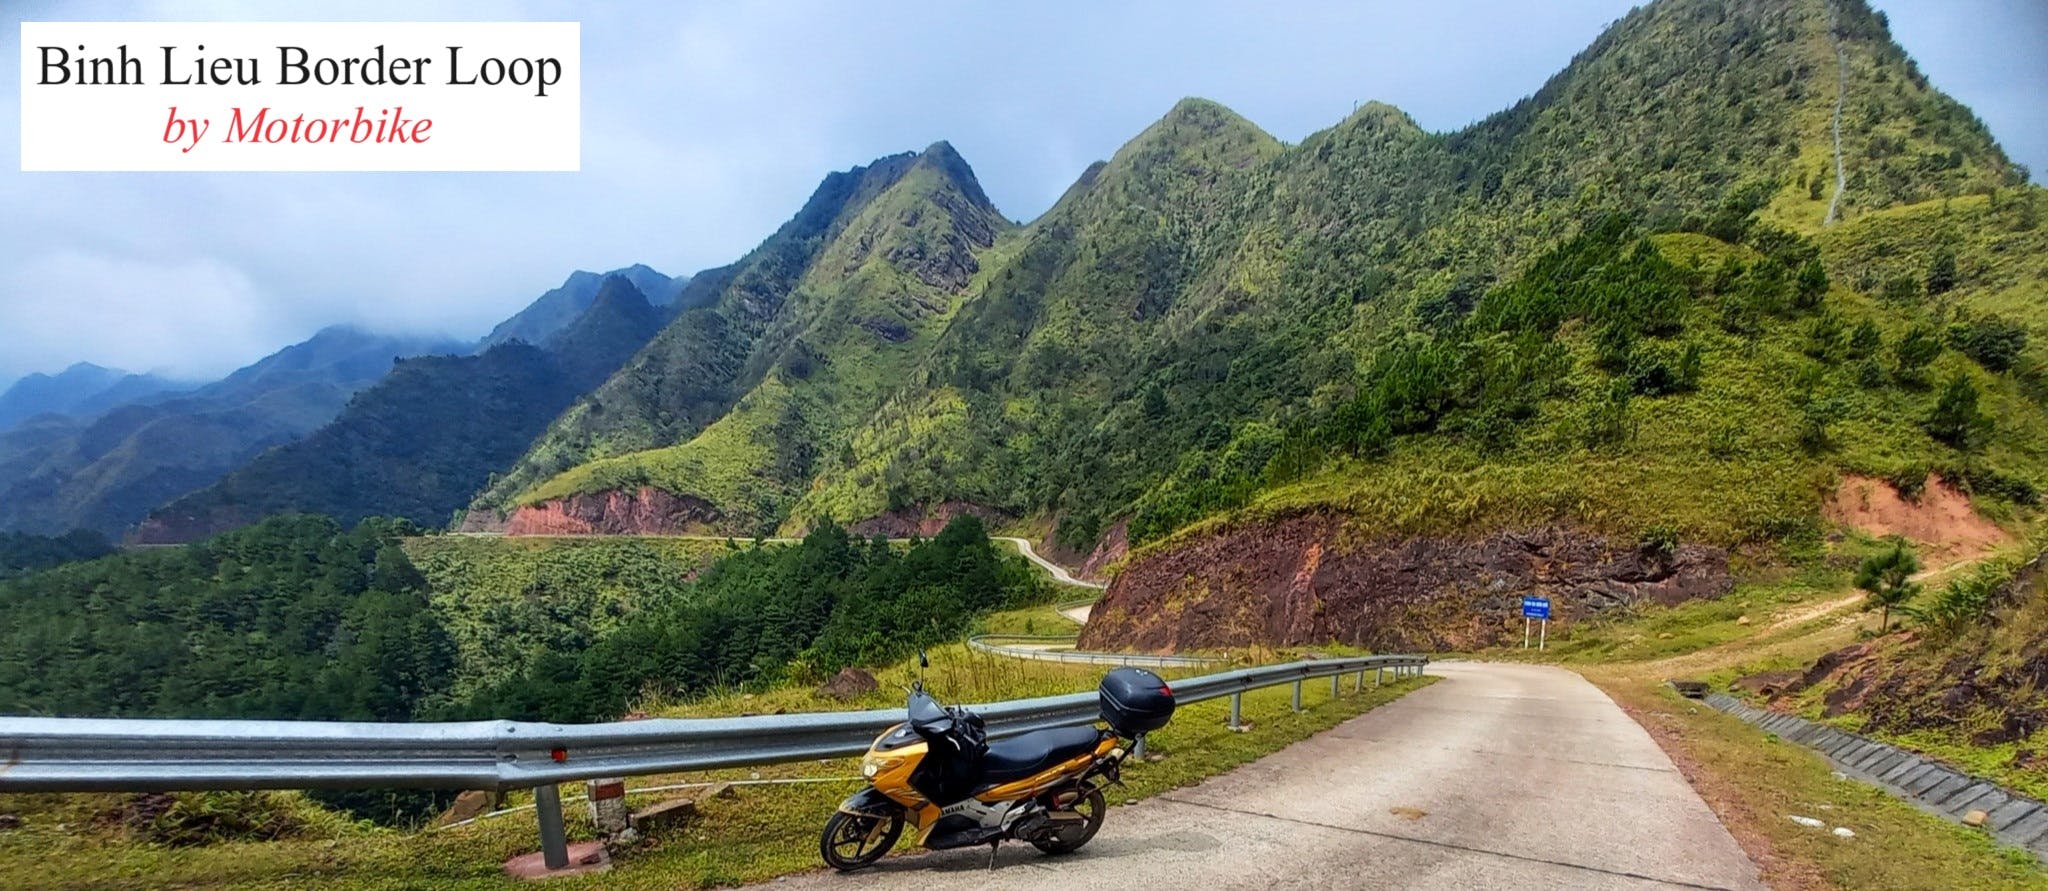 Binh Lieu Border Loop, Motorbike Guide, Quang Ninh, Vietnam